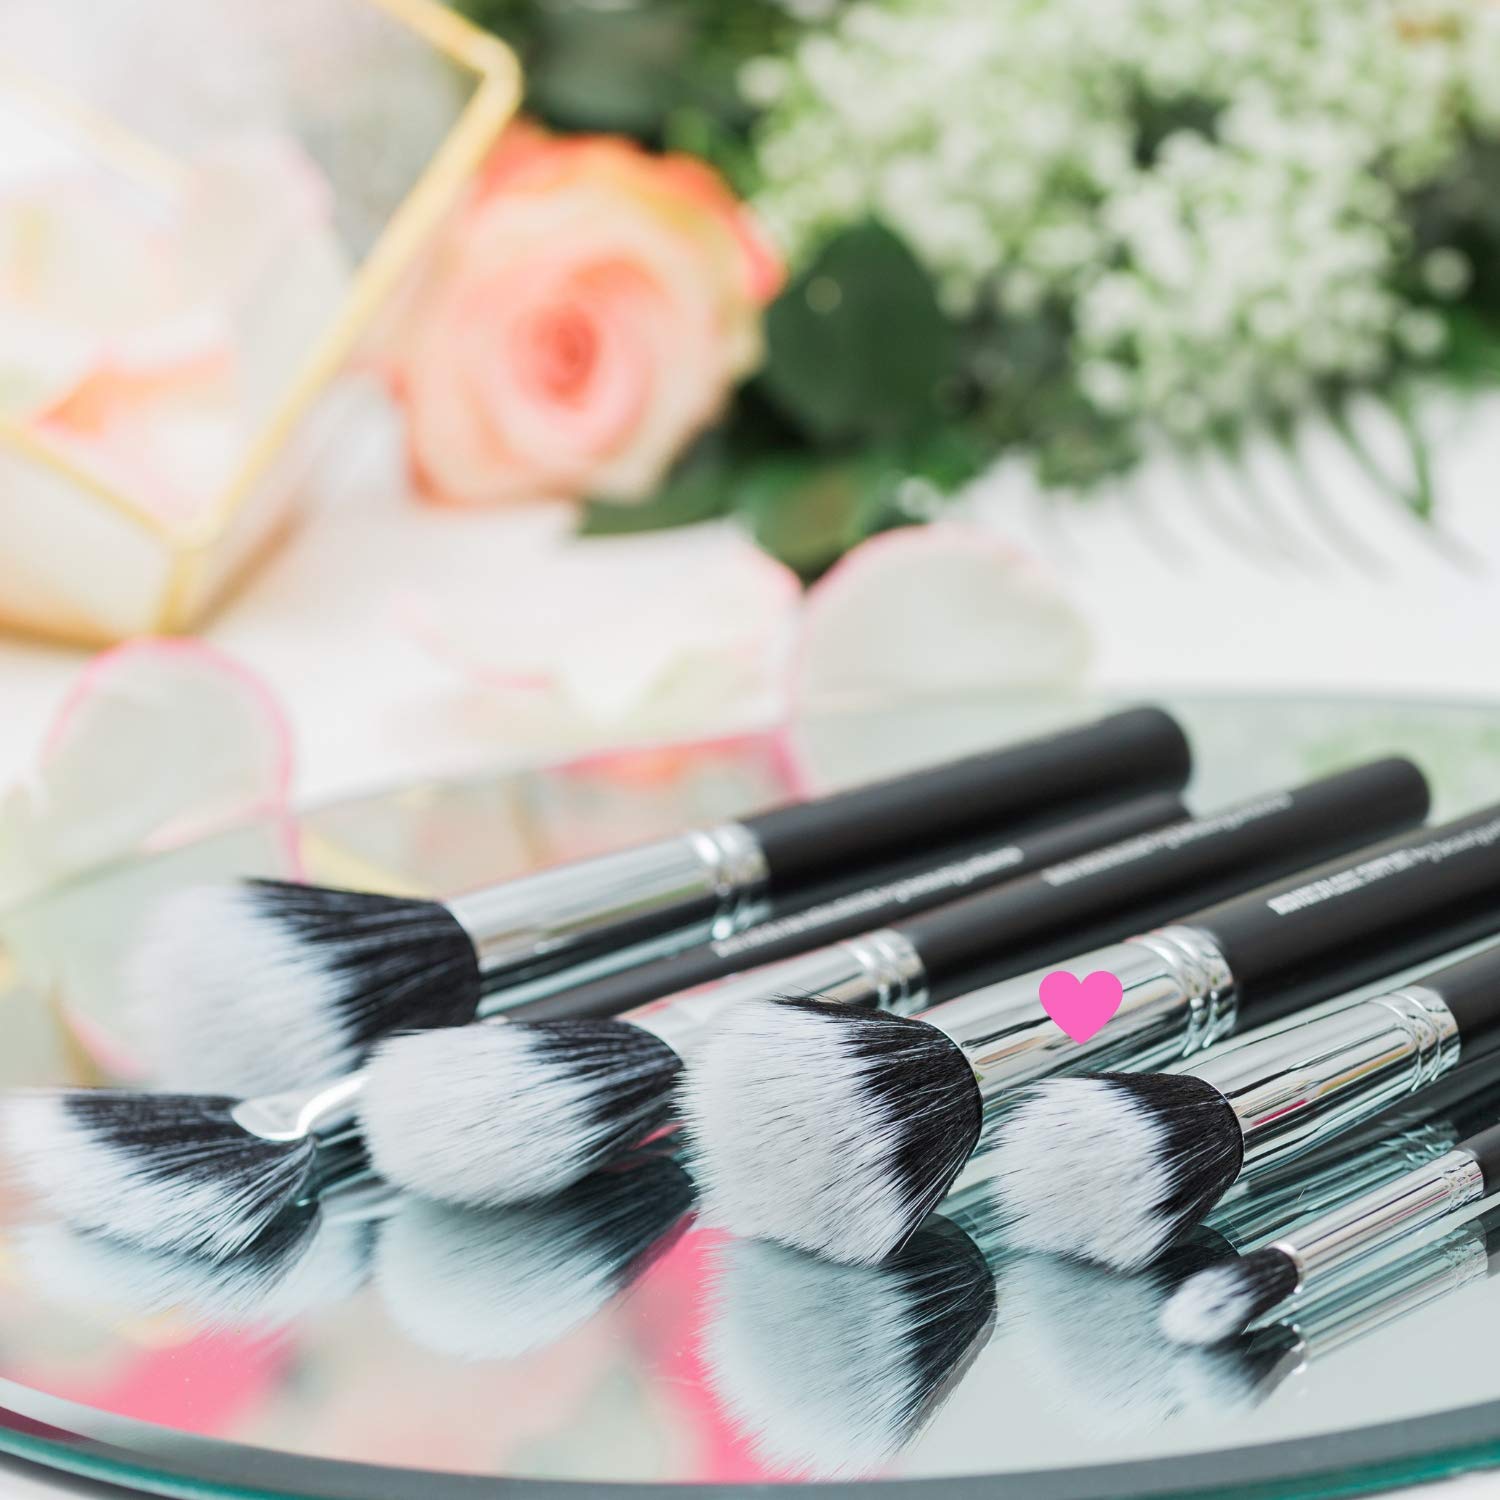 Large Stippling Foundation Makeup Brush – Beauty Junkees Flat Top Duo Fiber Synthetic Stipple Make Up Brushes, Sheer Flawless Blending Liquid, Cream, Powder Cosmetics, Vegan, Cruelty Free